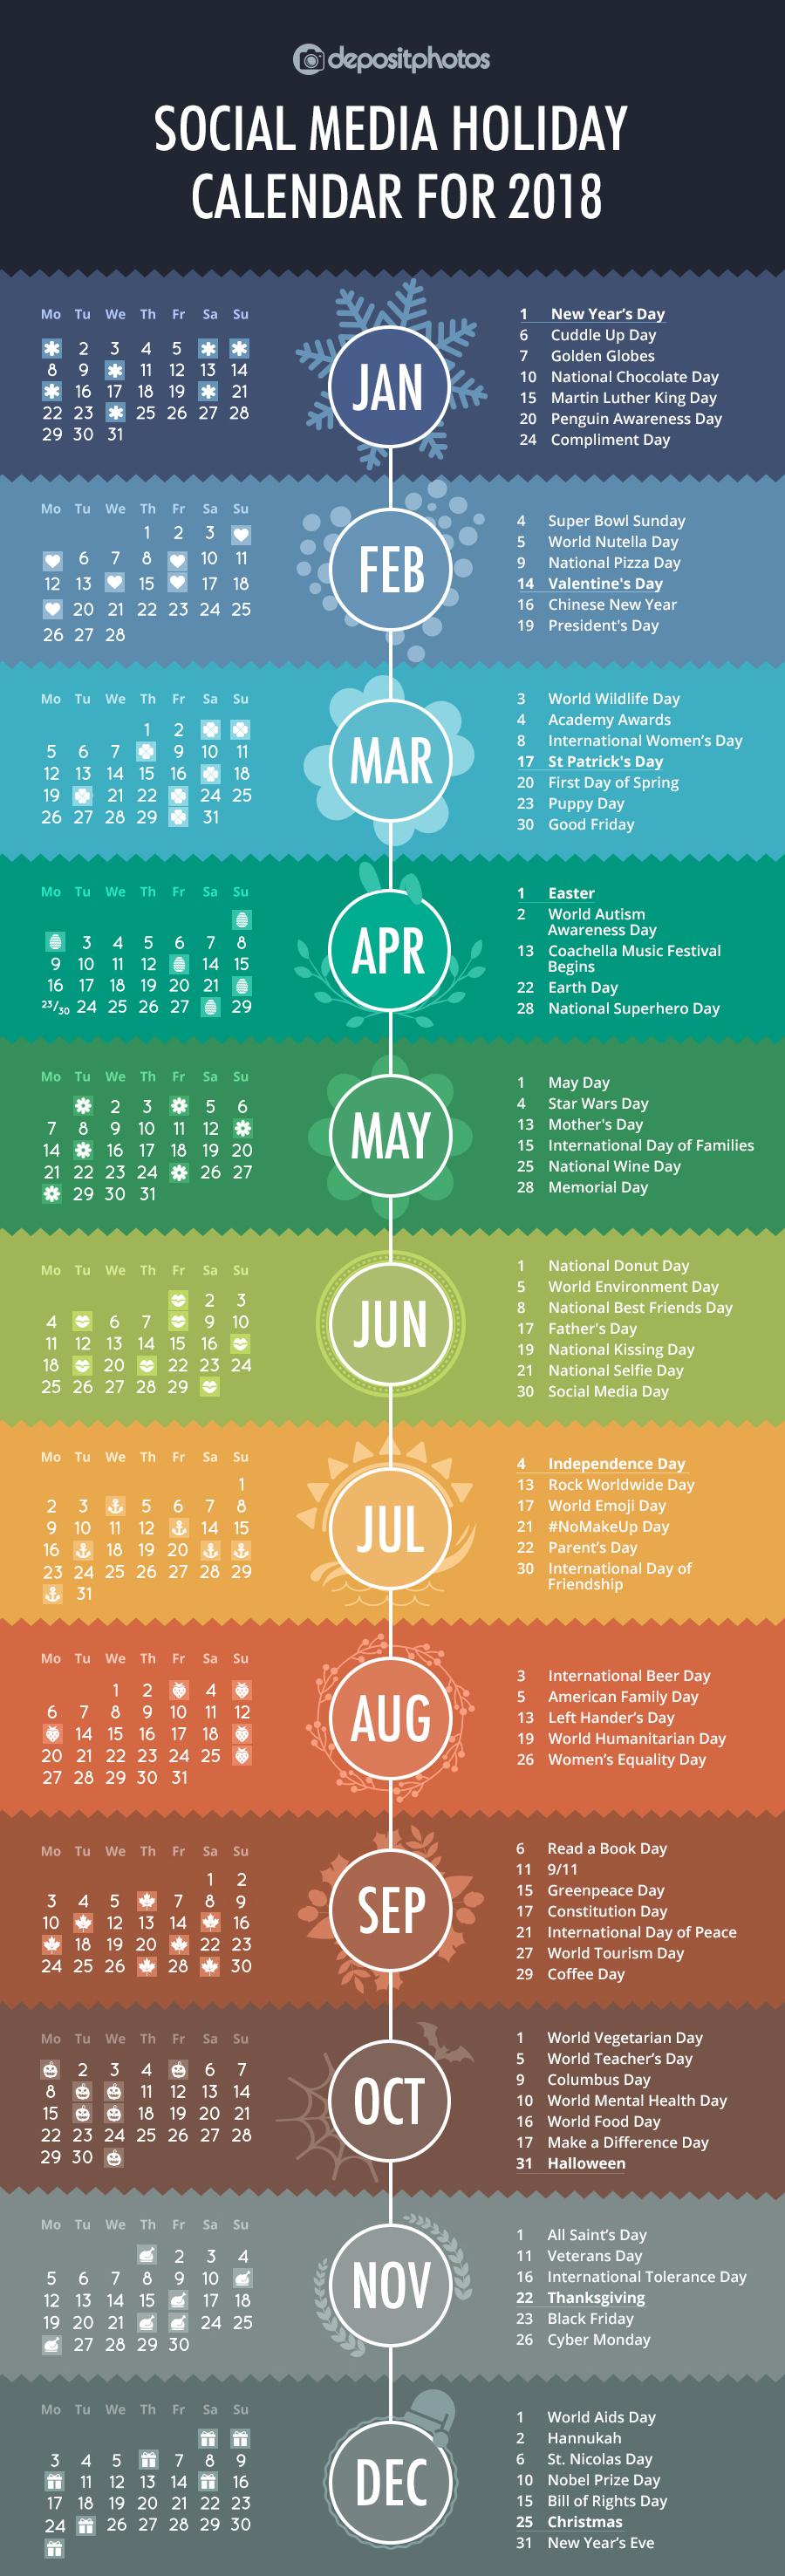 social-media-holiday-calendar-for-2018-infographic